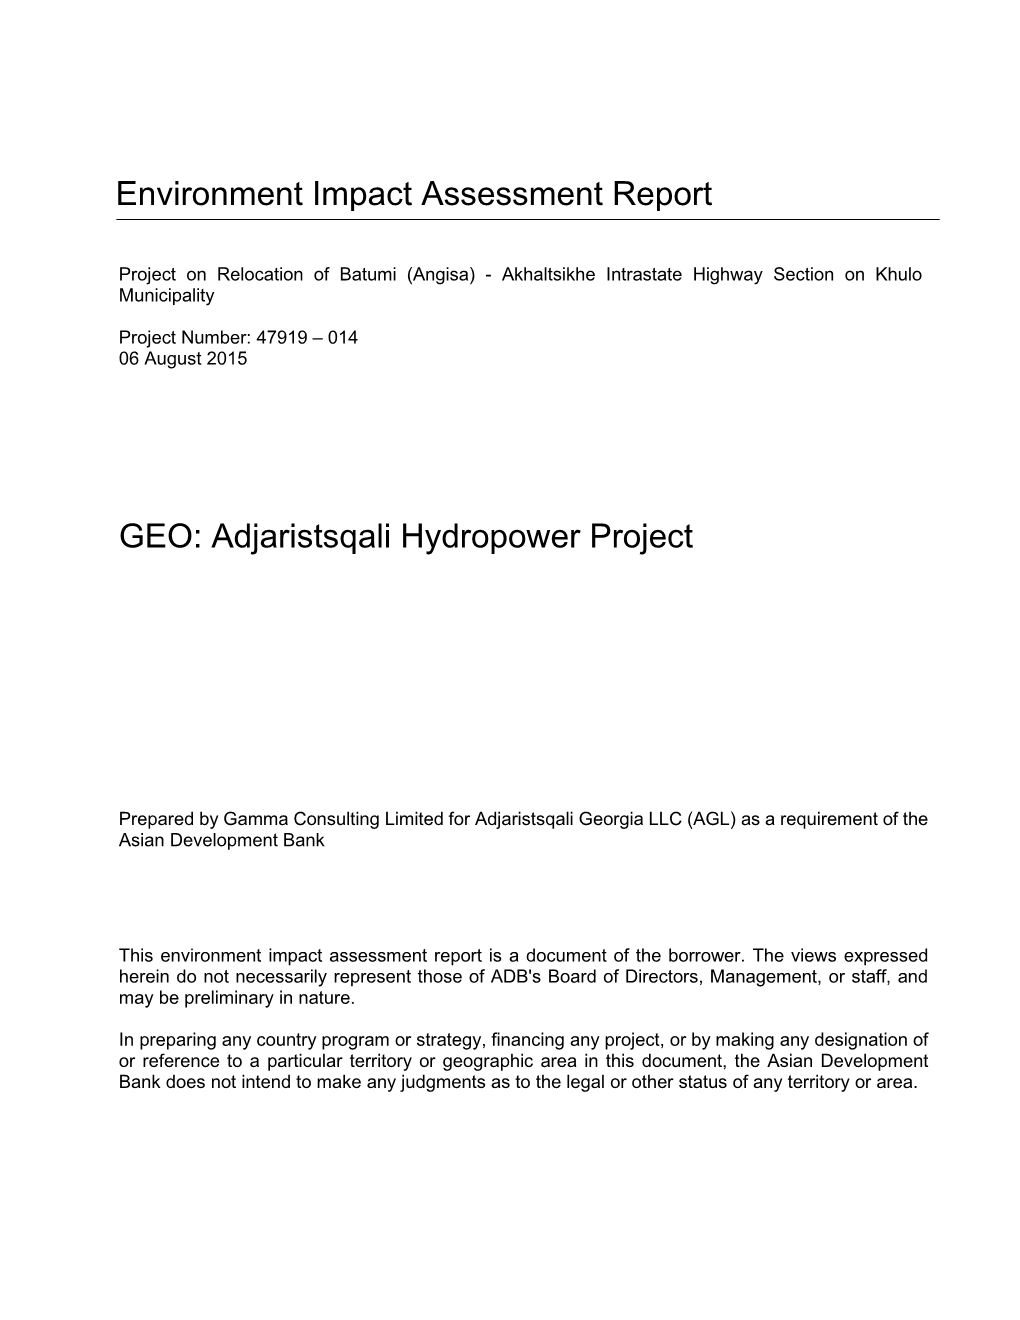 Environment Impact Assessment Report GEO: Adjaristsqali